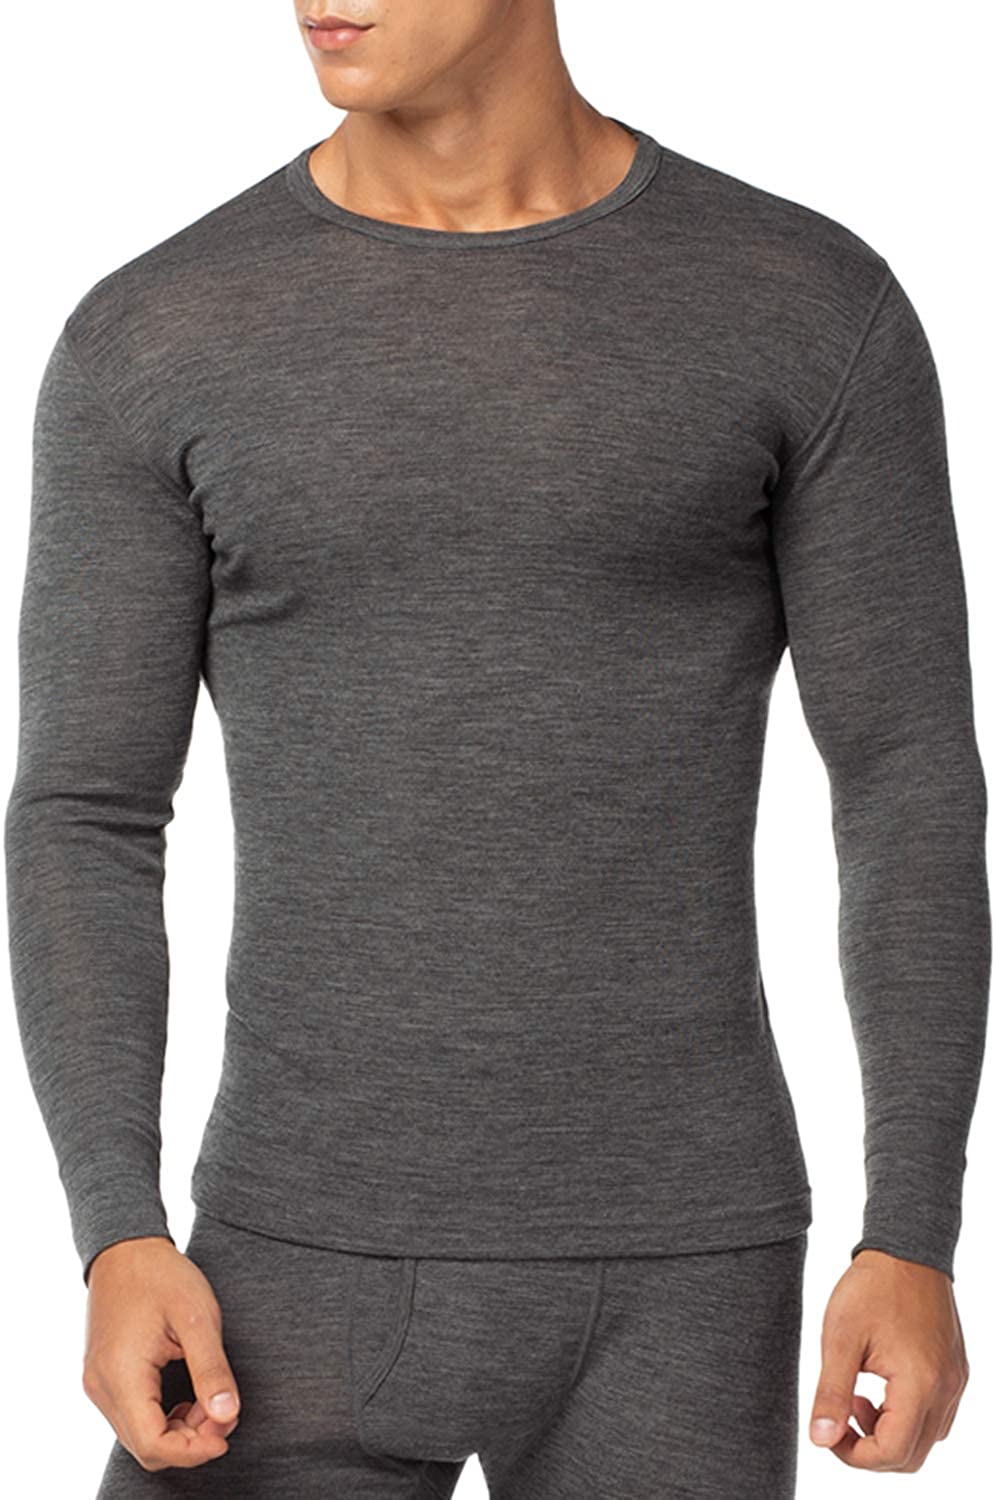 LAPASA Men's 100 Merino Wool Thermal Underwear Top Crew Neck, Grey, Size Medium eBay